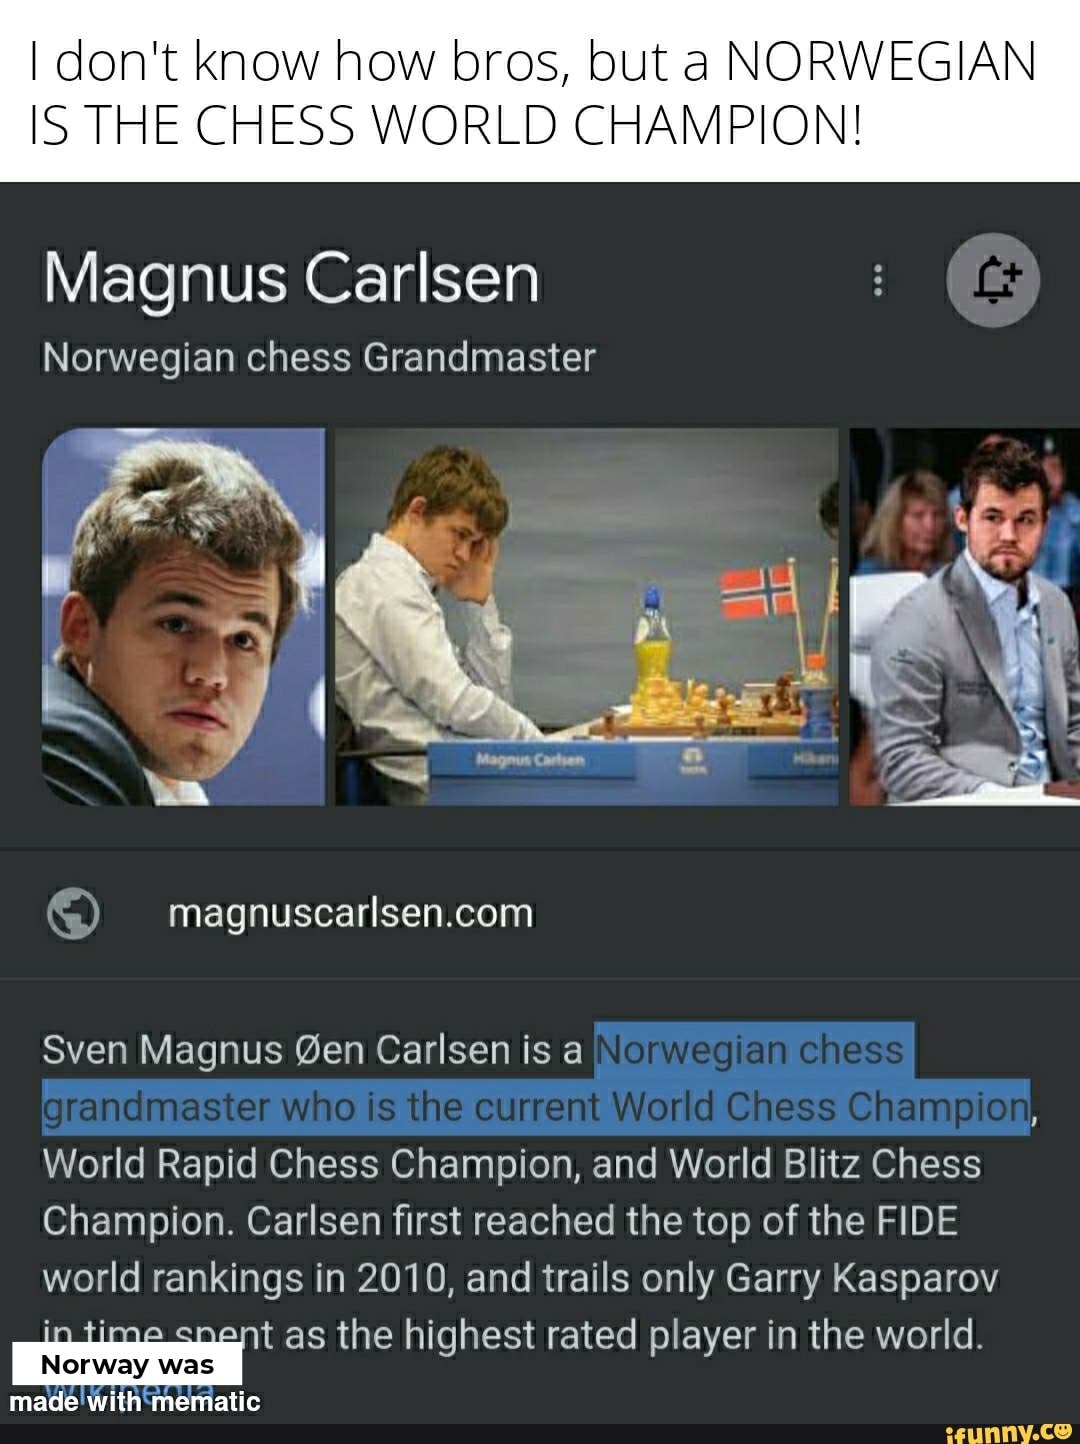 brilliant #chess #meme #magnuscarlsen